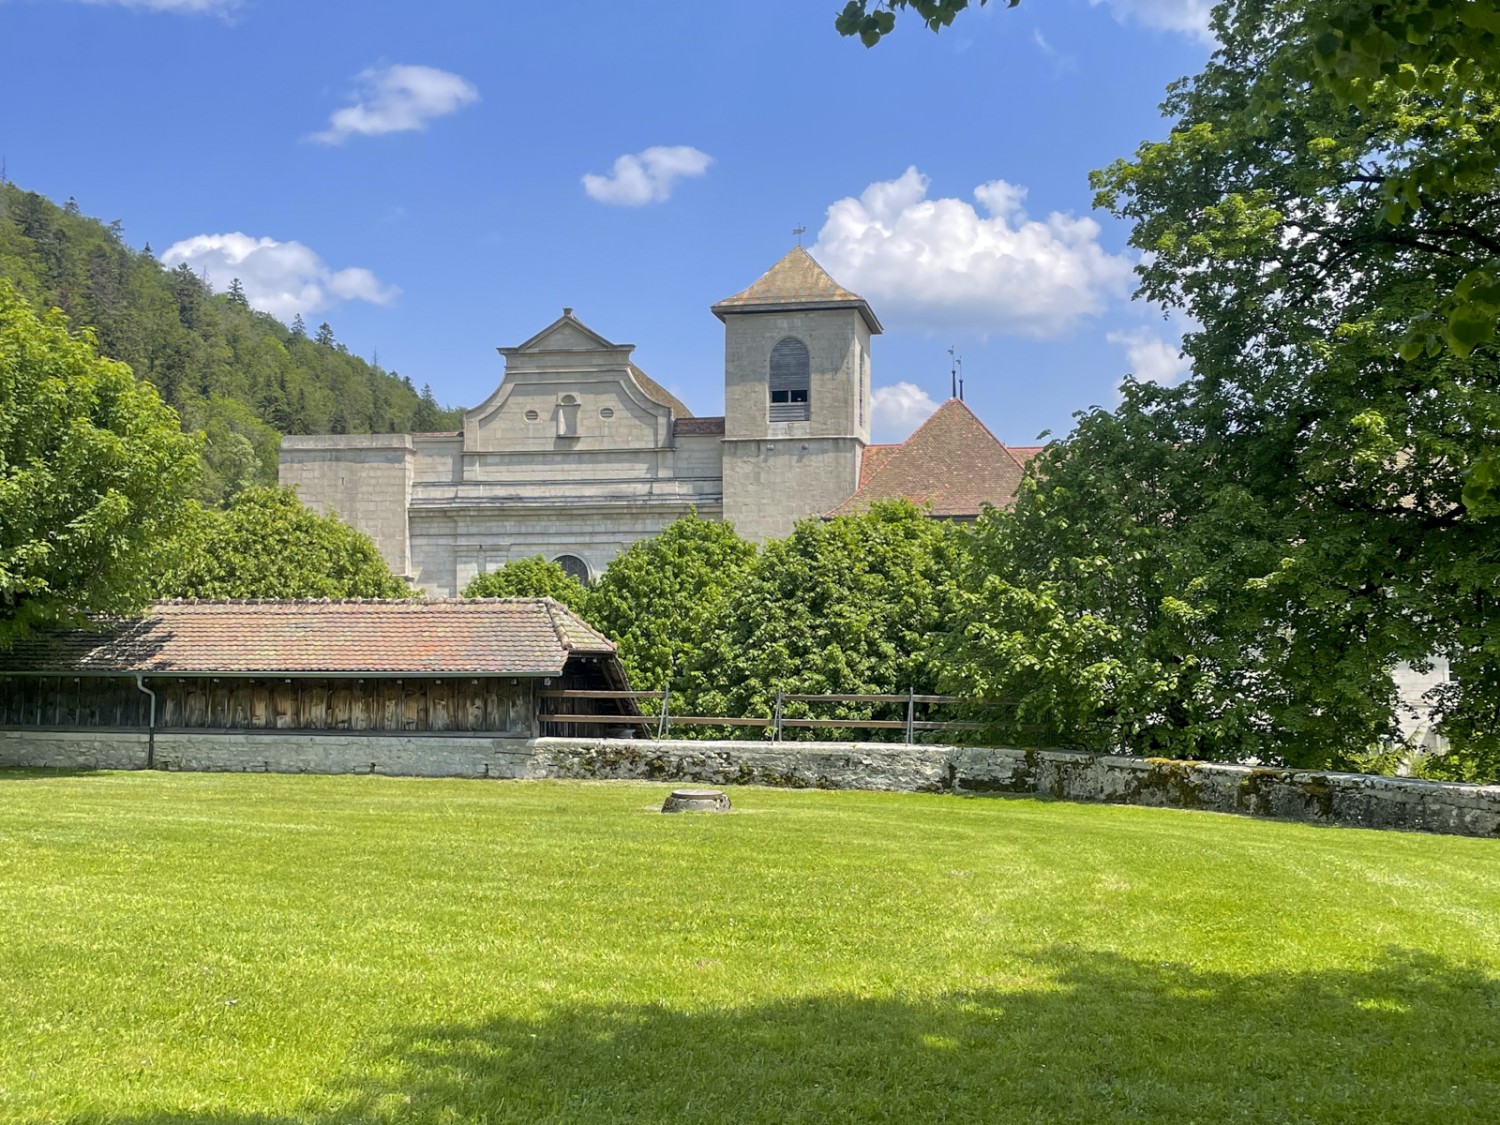 Das spektakuläre Barockkloster in der Jurasonne. Bild: Lukas Frehner